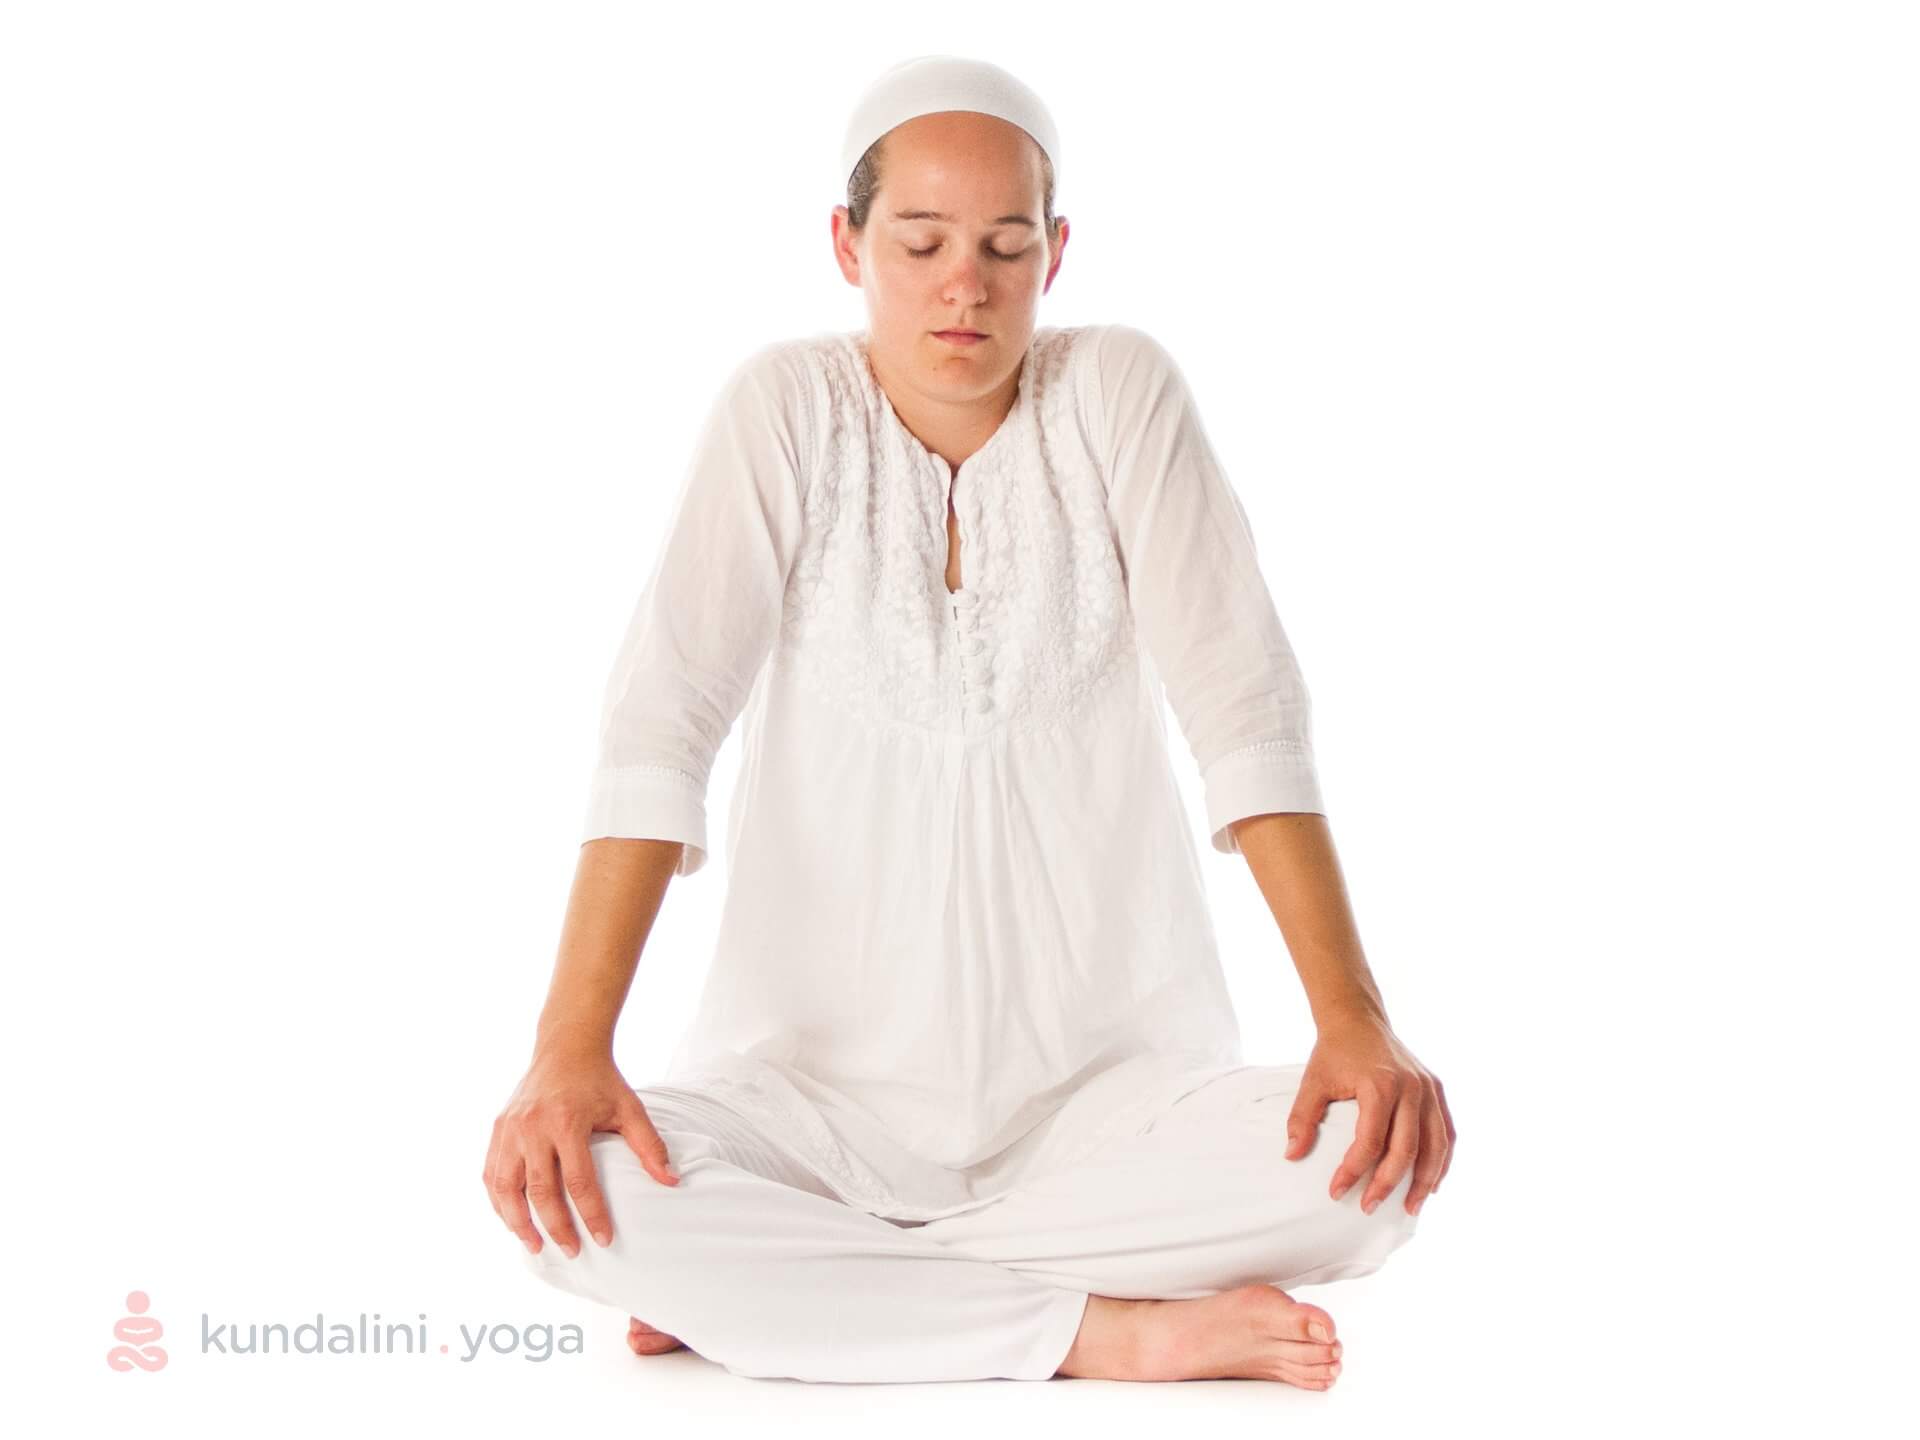 15 Min Kundalini Yoga for Love Energizing Morning Kriya for Your